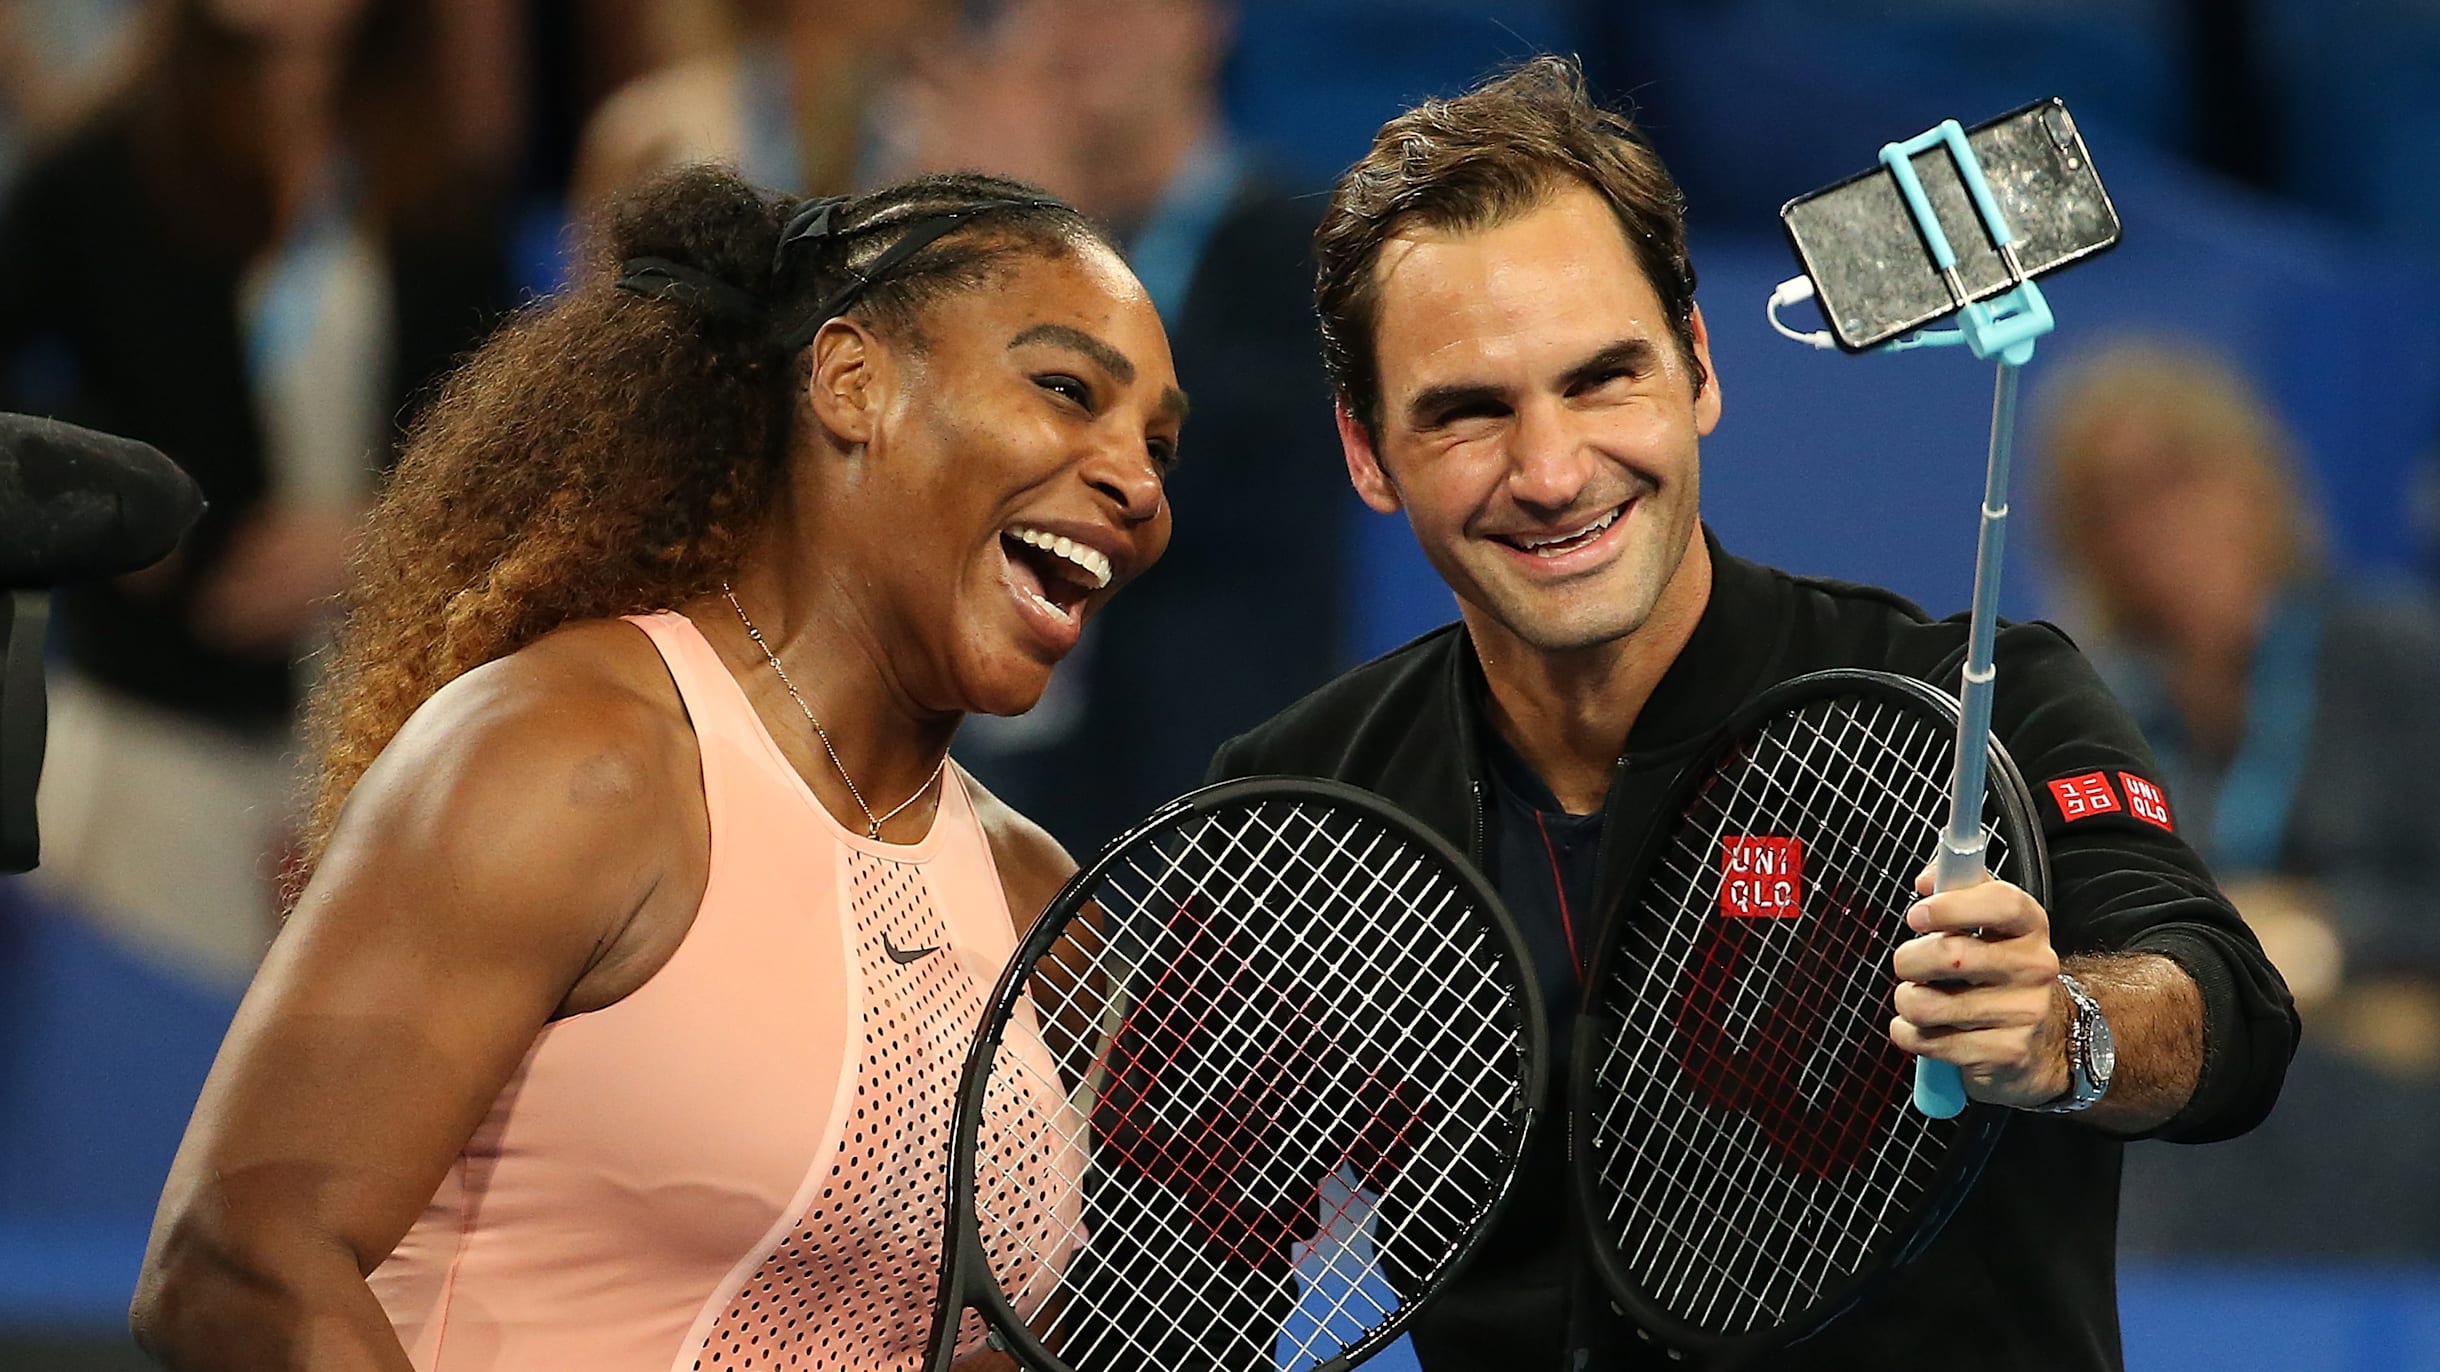 duisternis Ontcijferen verzoek Best tennis players in the world: From Roger Federer to Serena Williams